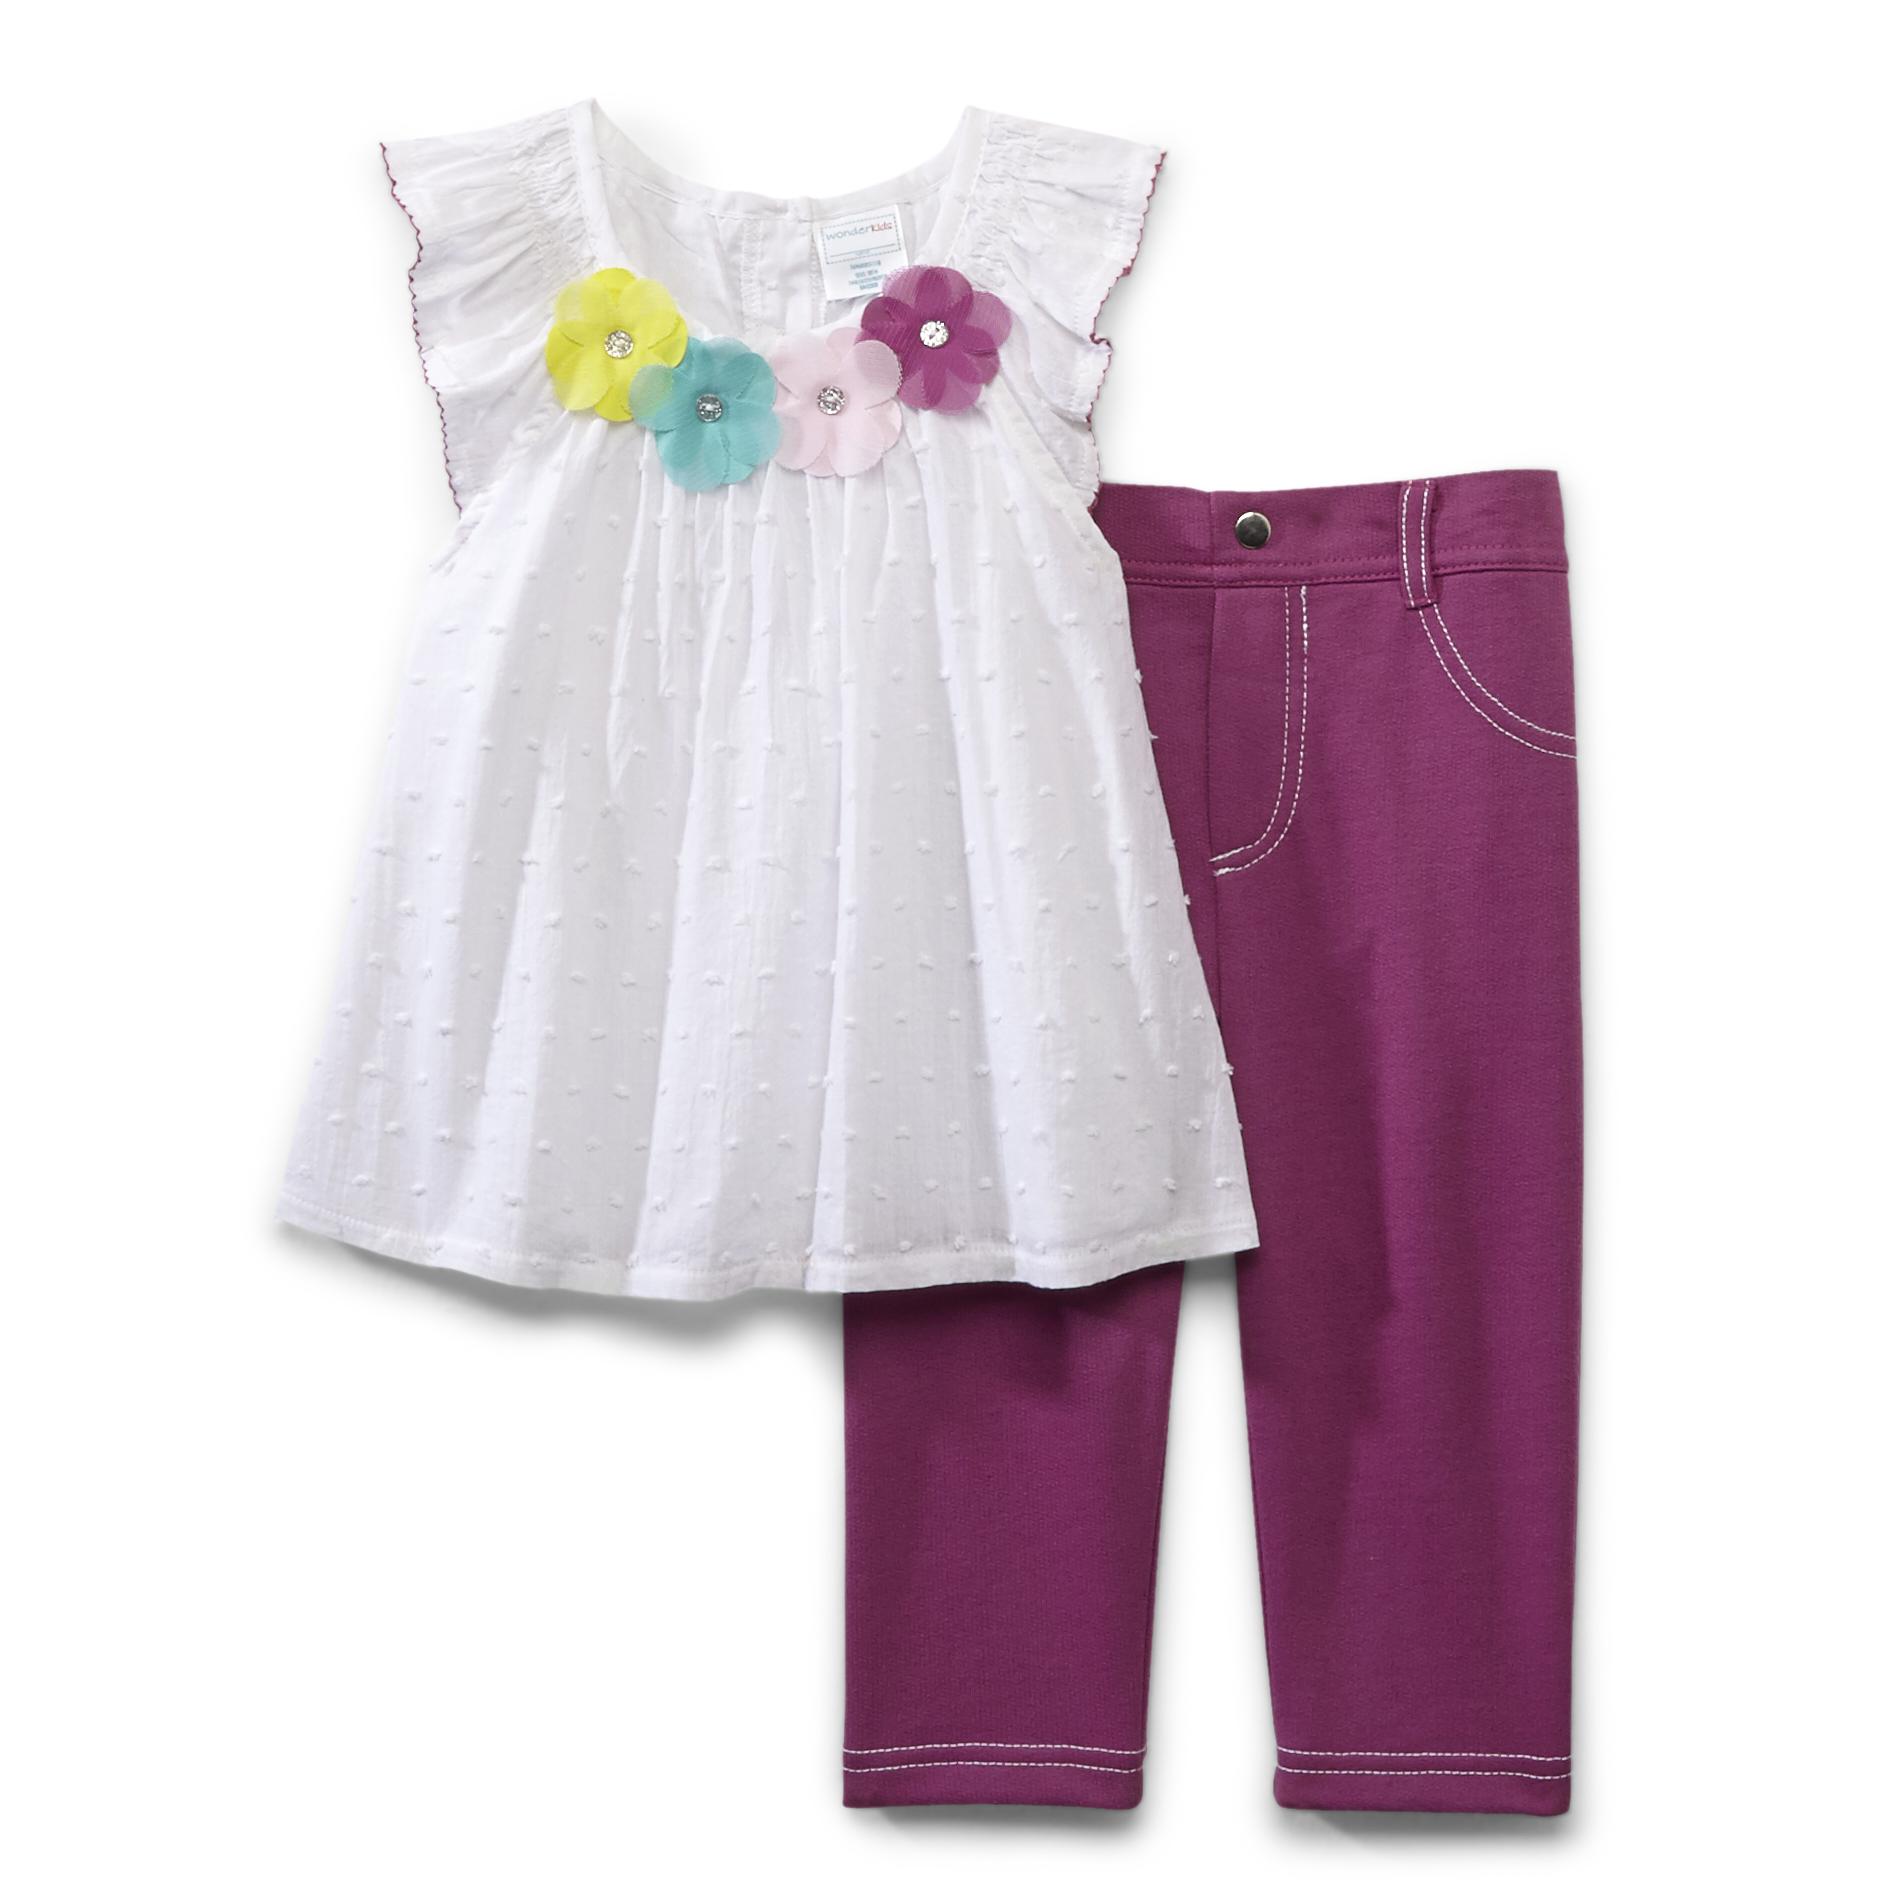 WonderKids Infant & Toddler Girl's Smocked Swiss Dot Top & Knit Pants